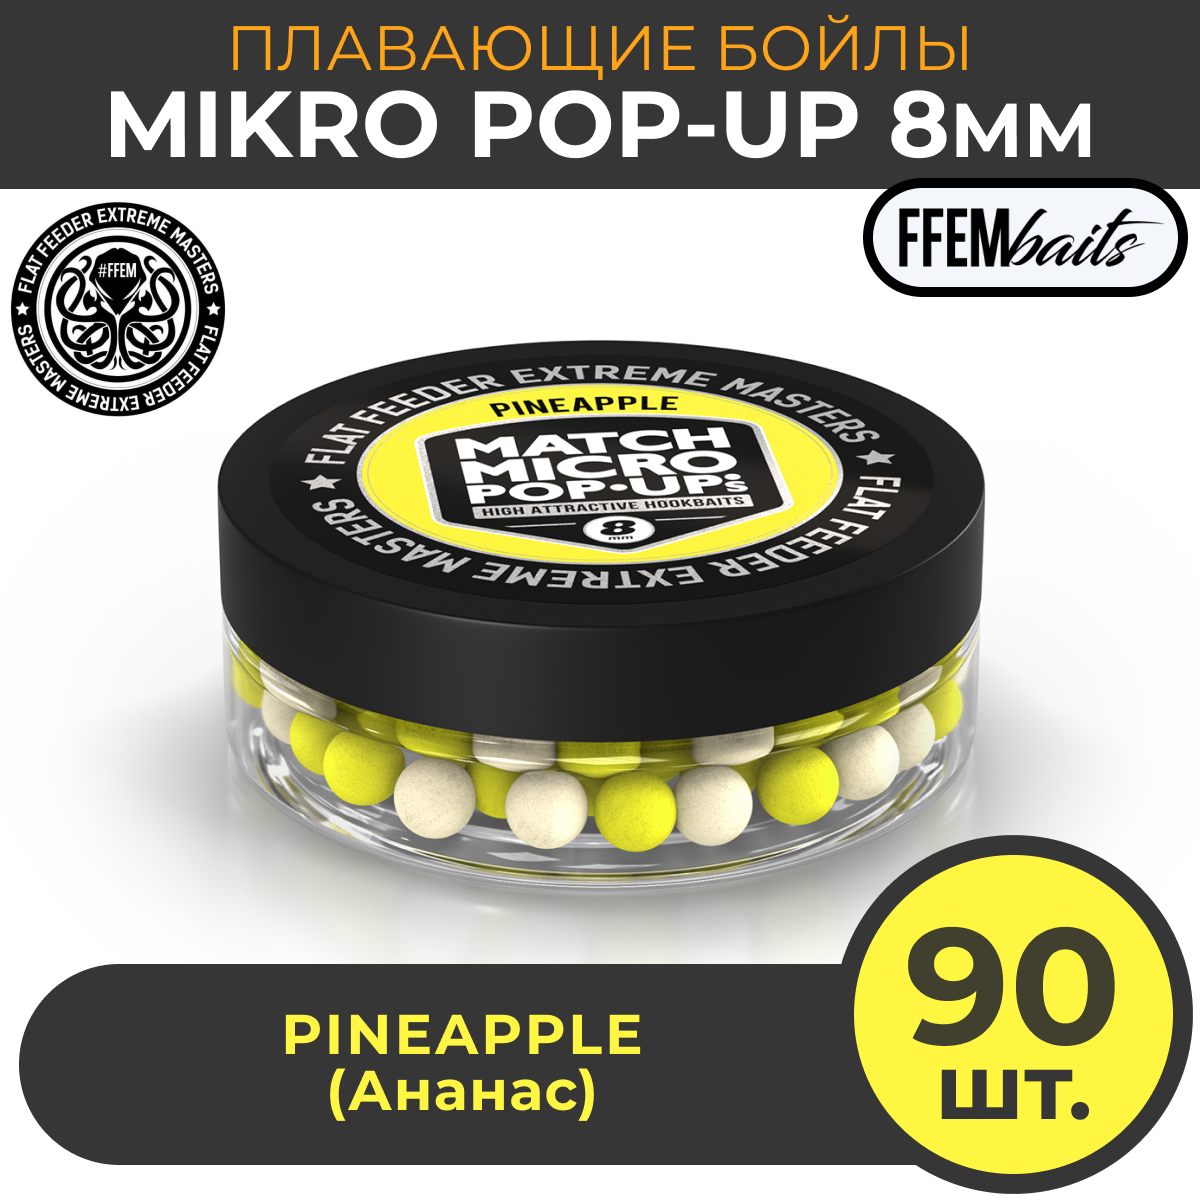 Плавающие бойлы Match Micro POP-UP 8 мм насадочные поп-ап / FFEM Pop-Up Micro Pineapple 8mm Ананас